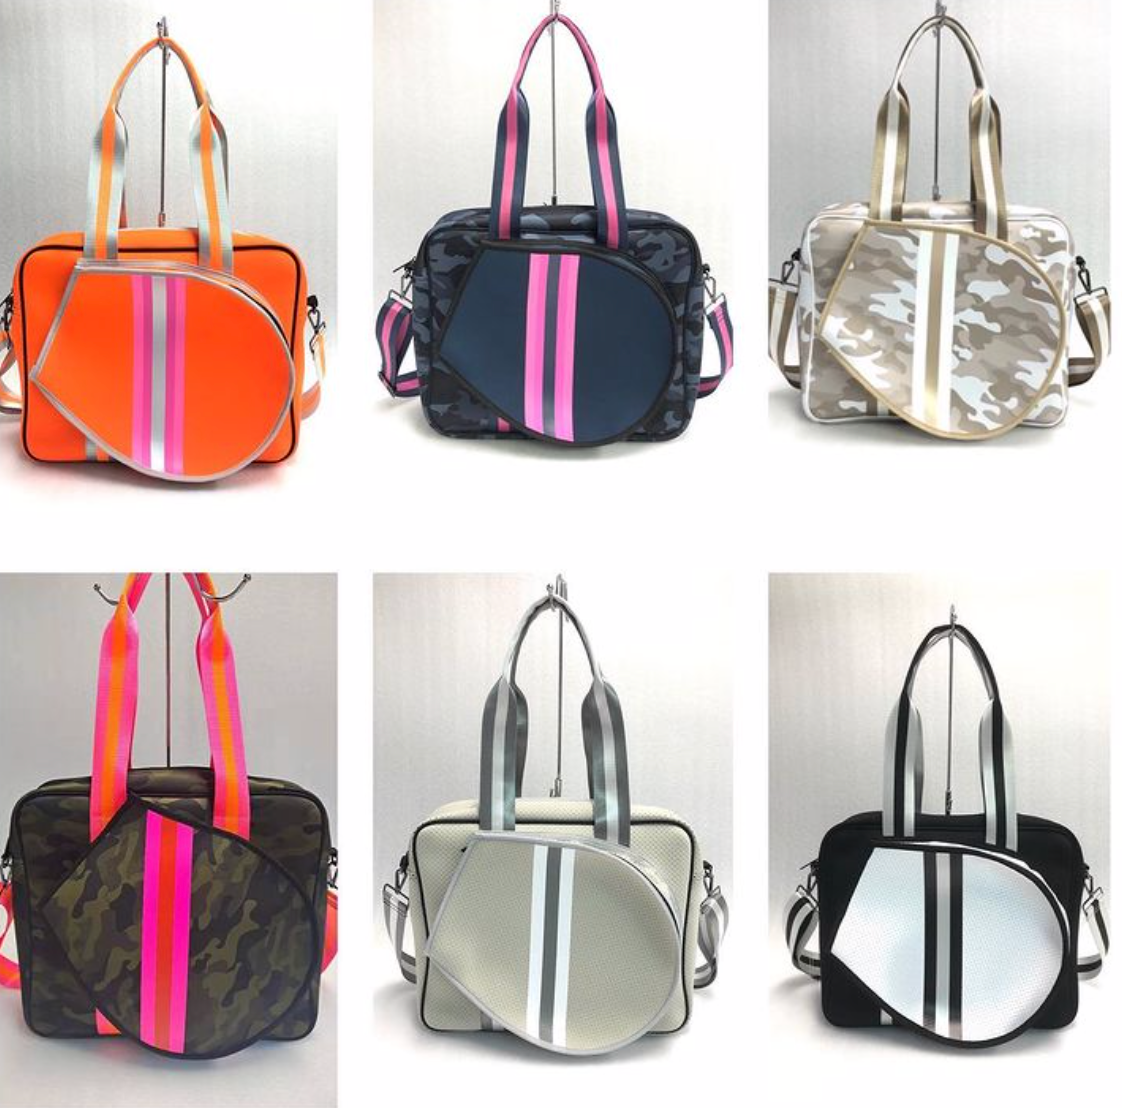 Perri's Champions Collection Crossbody Bag